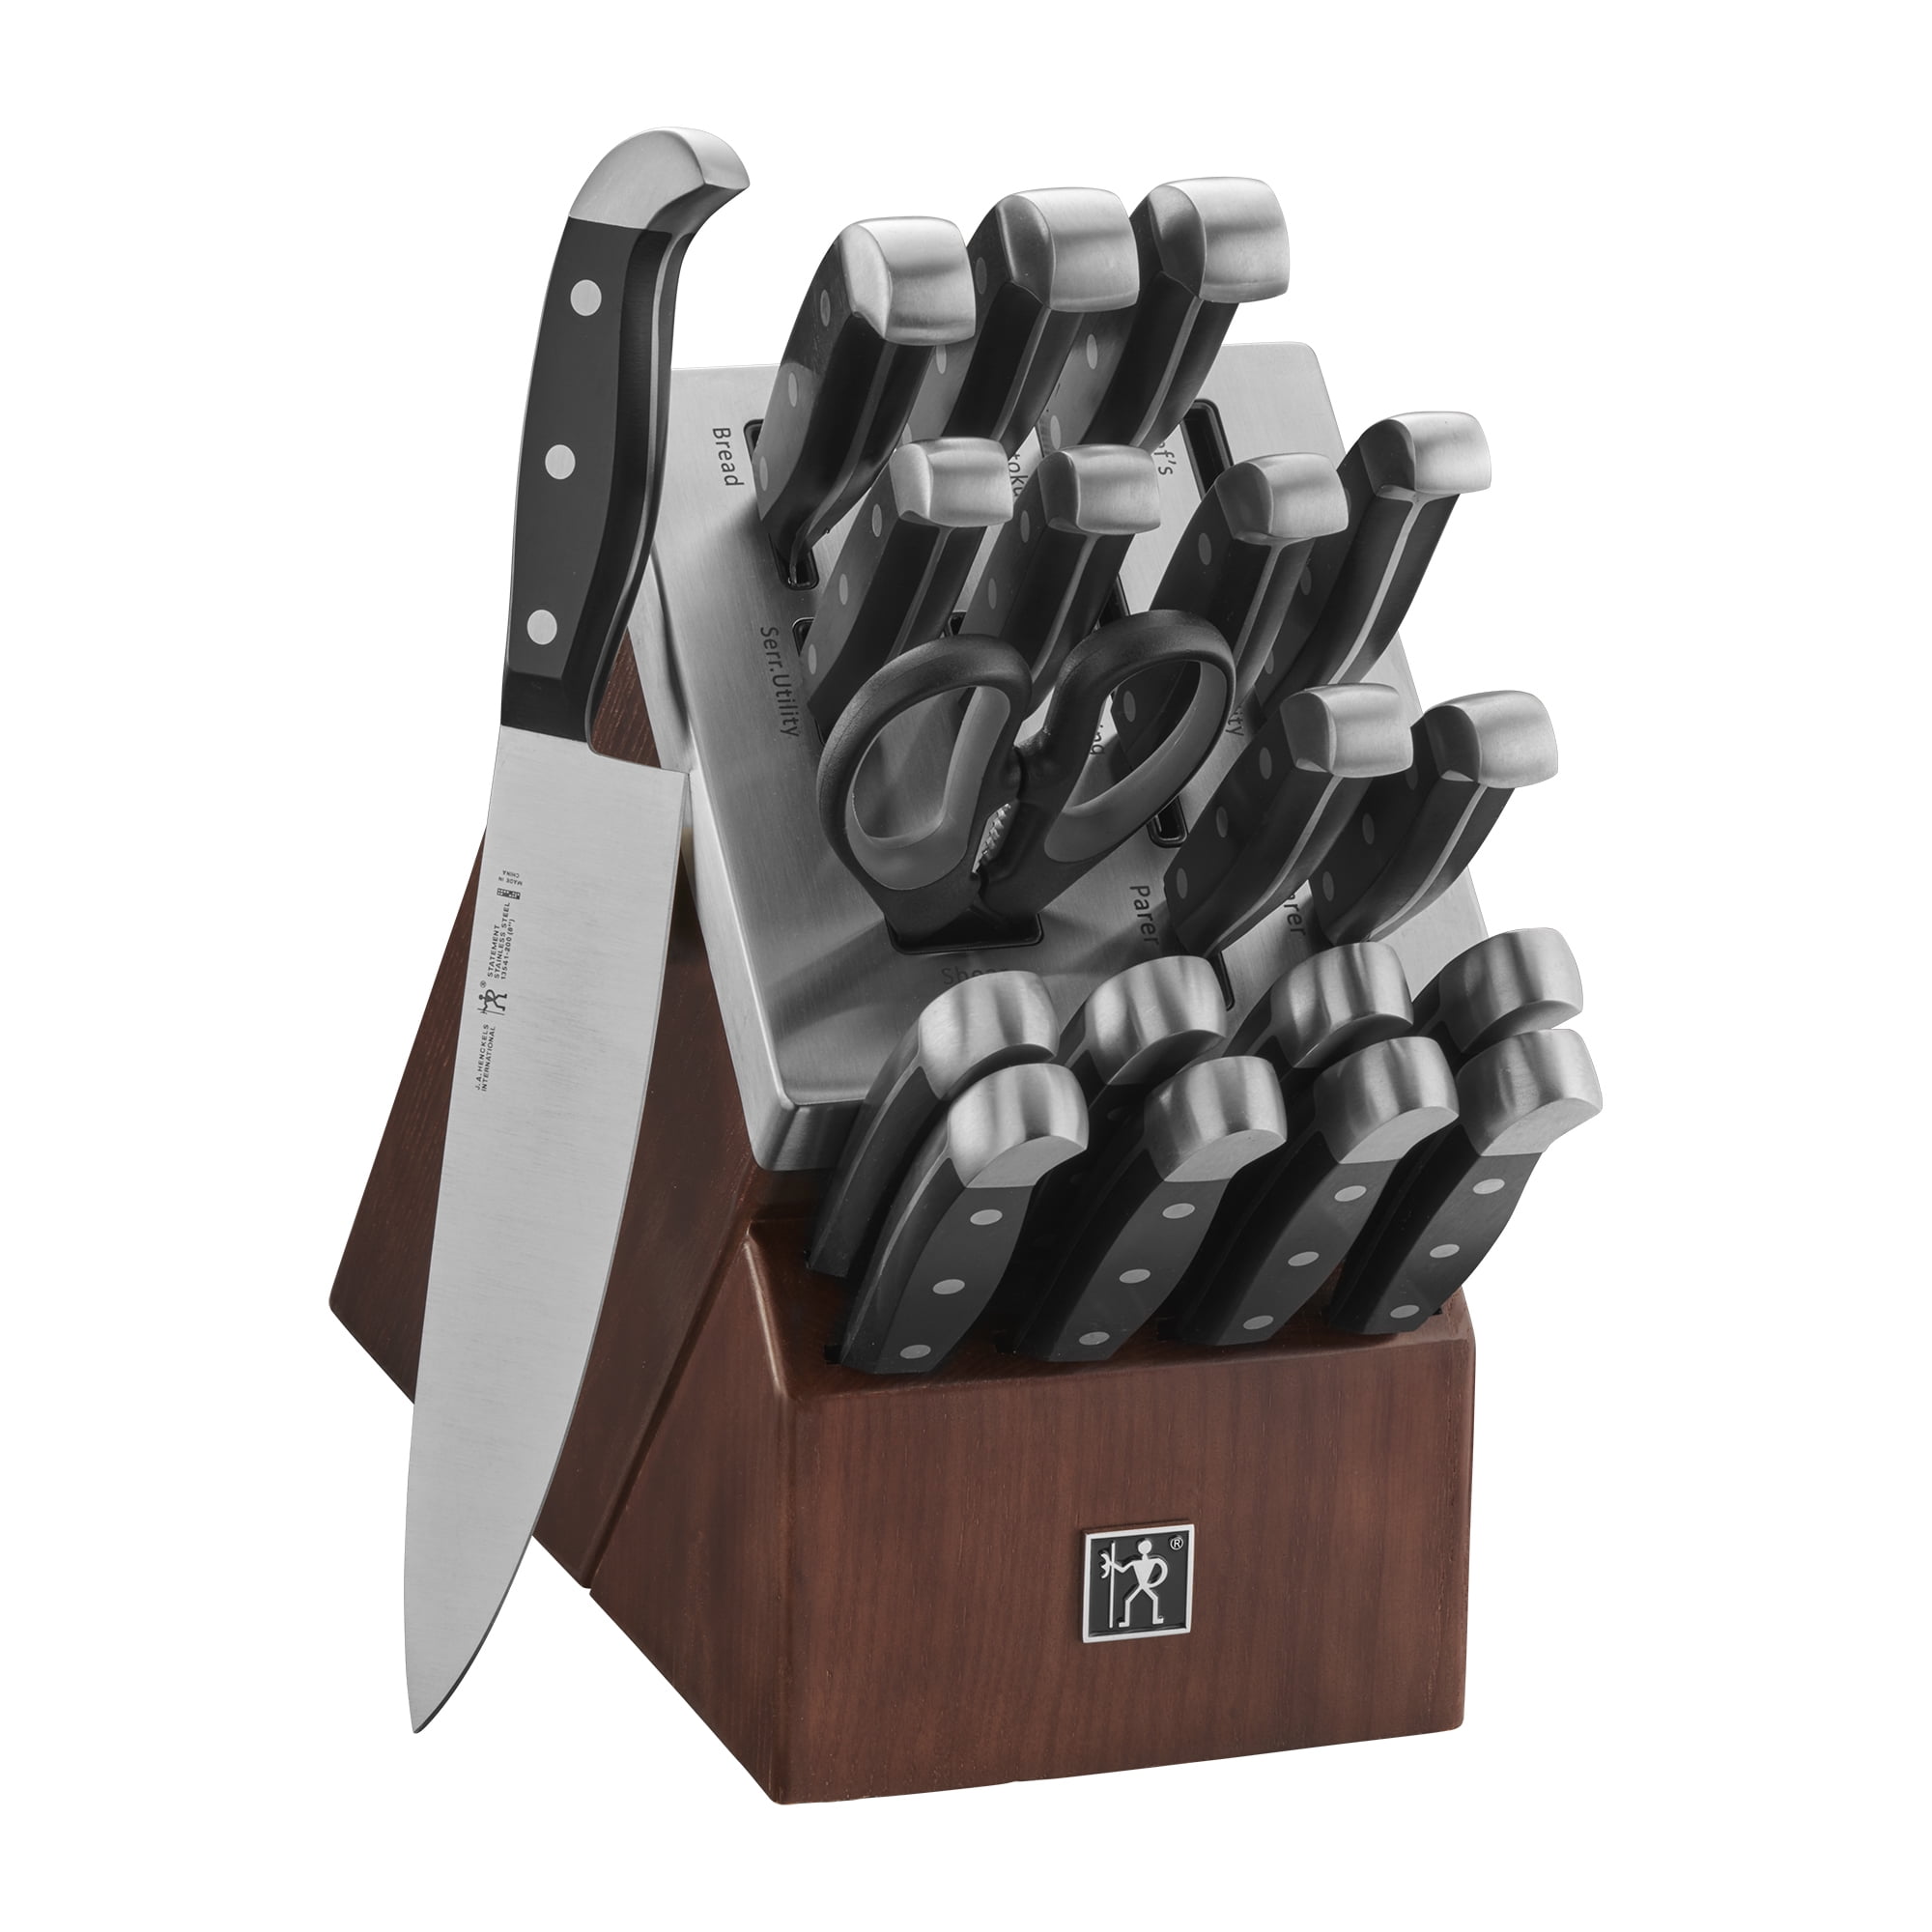 Calphalon Contemporary 20-Piece Self-Sharpening Knife Set with SharpIN  Technology + Reviews